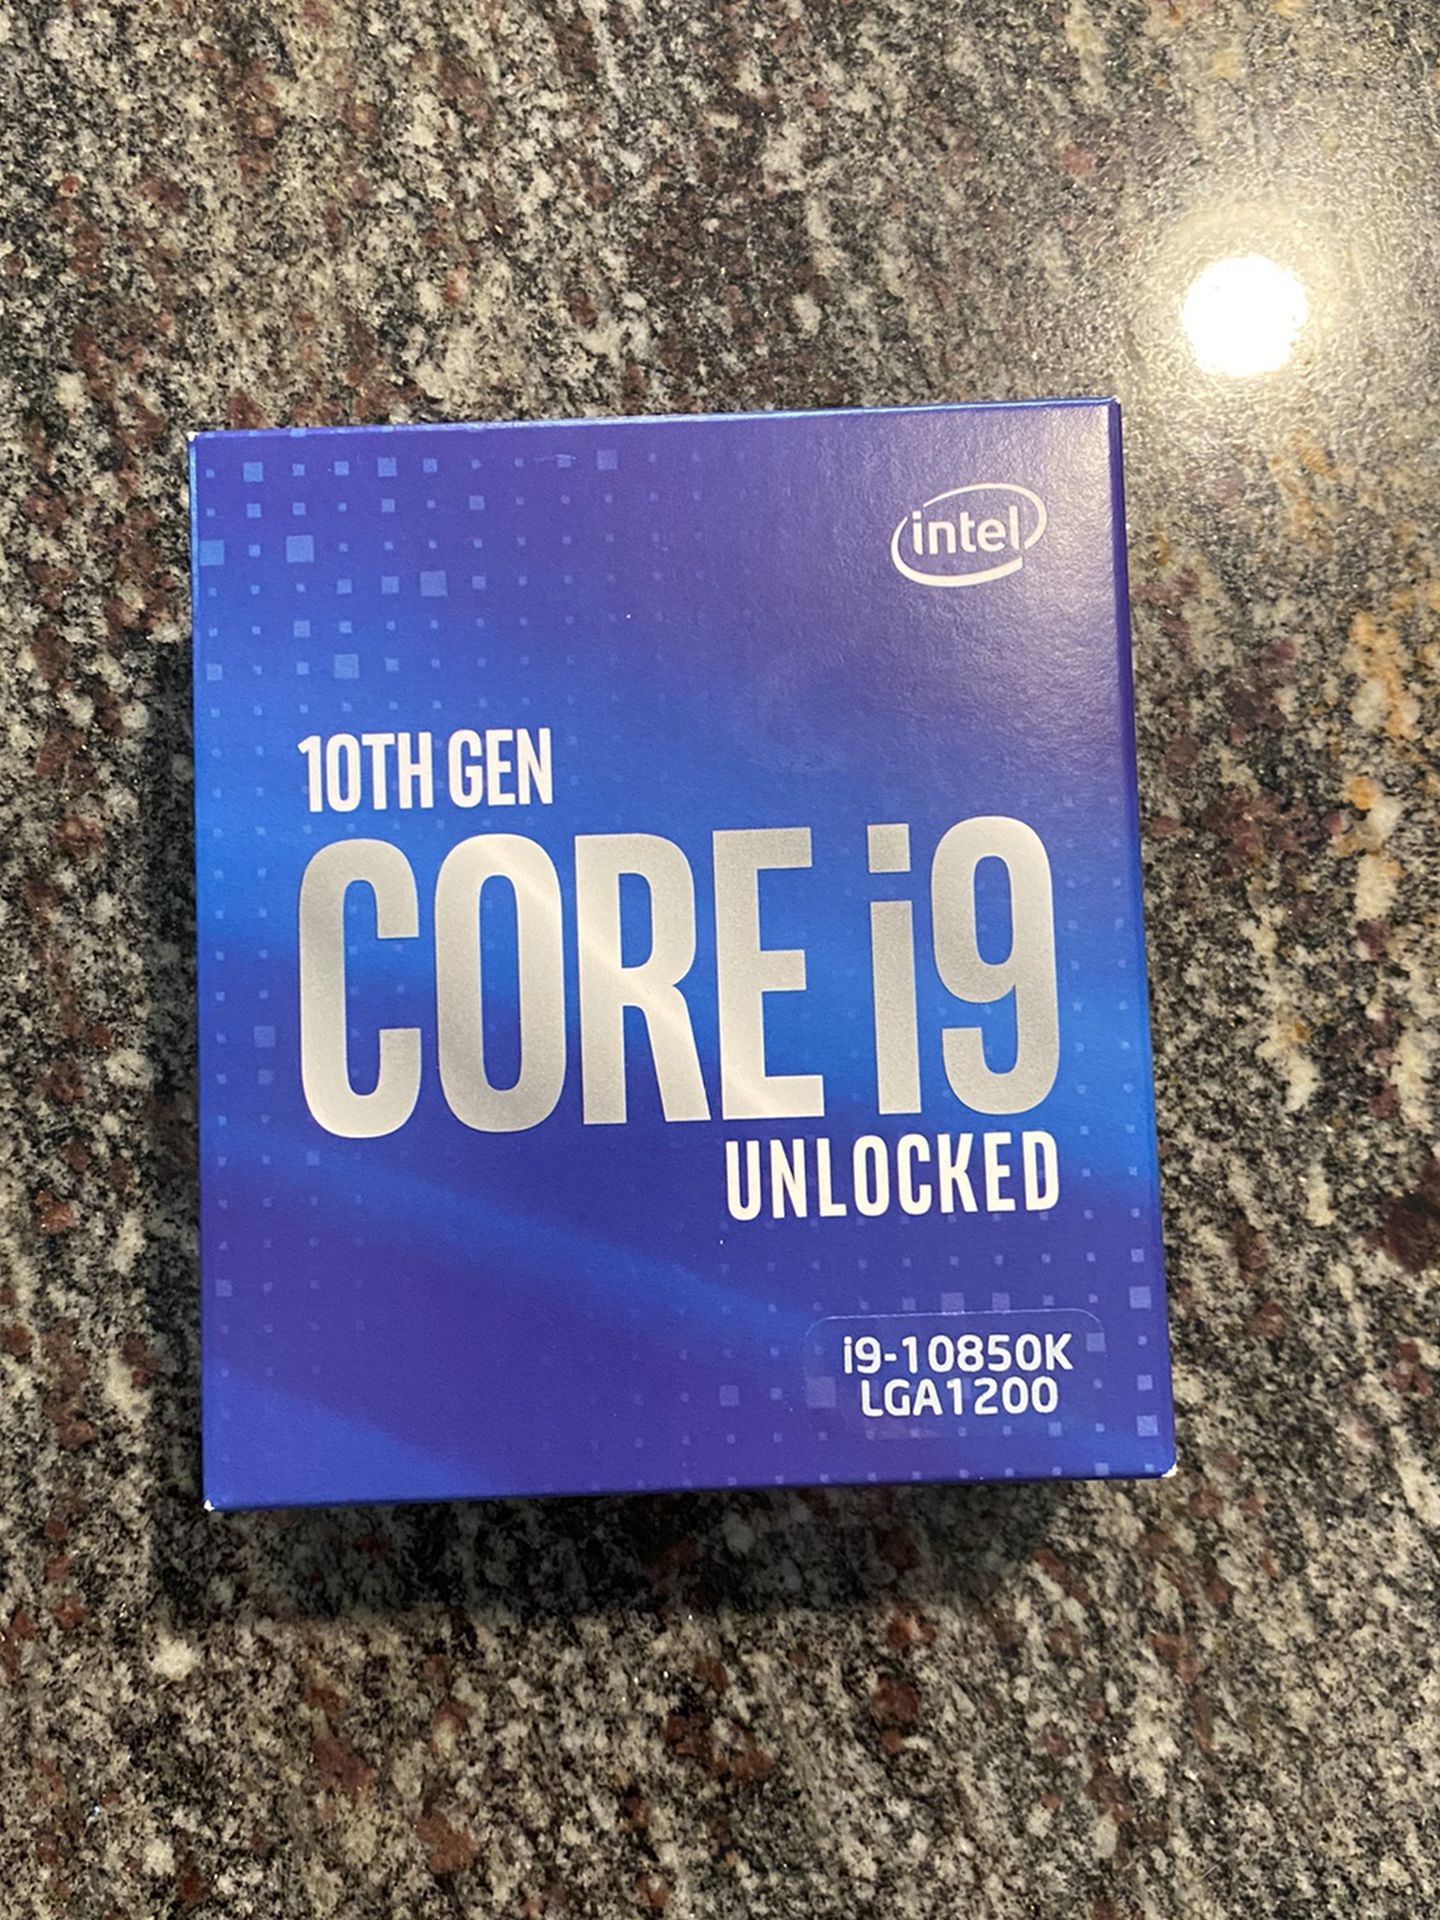 Intel Core i9-10850k 3.6 GHz Desktop Processor | Brand New